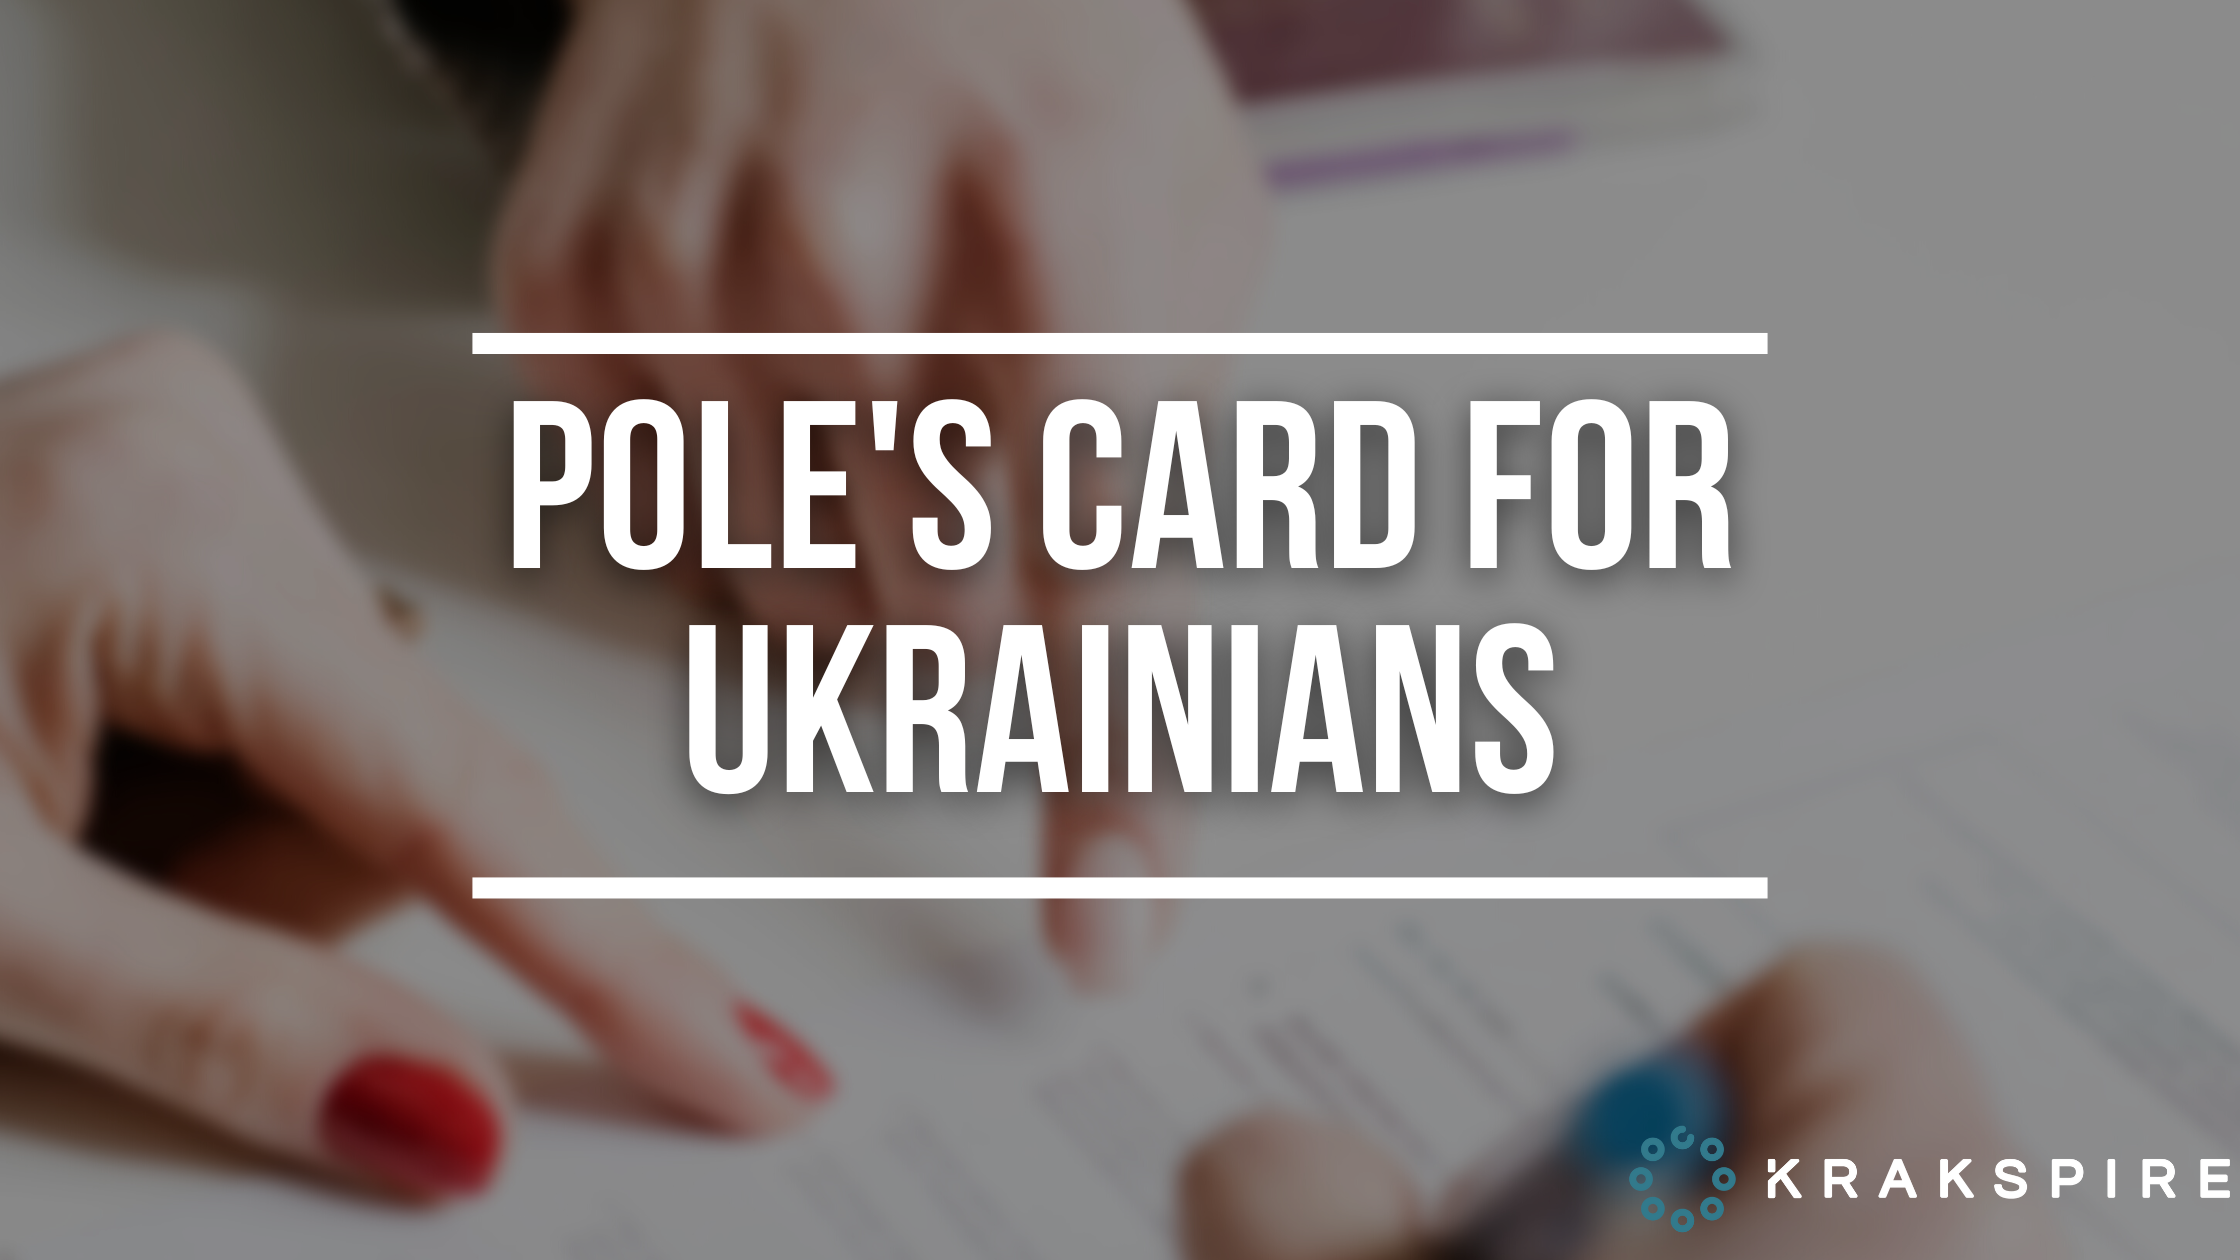 The Pole's card for Ukrainian citizens